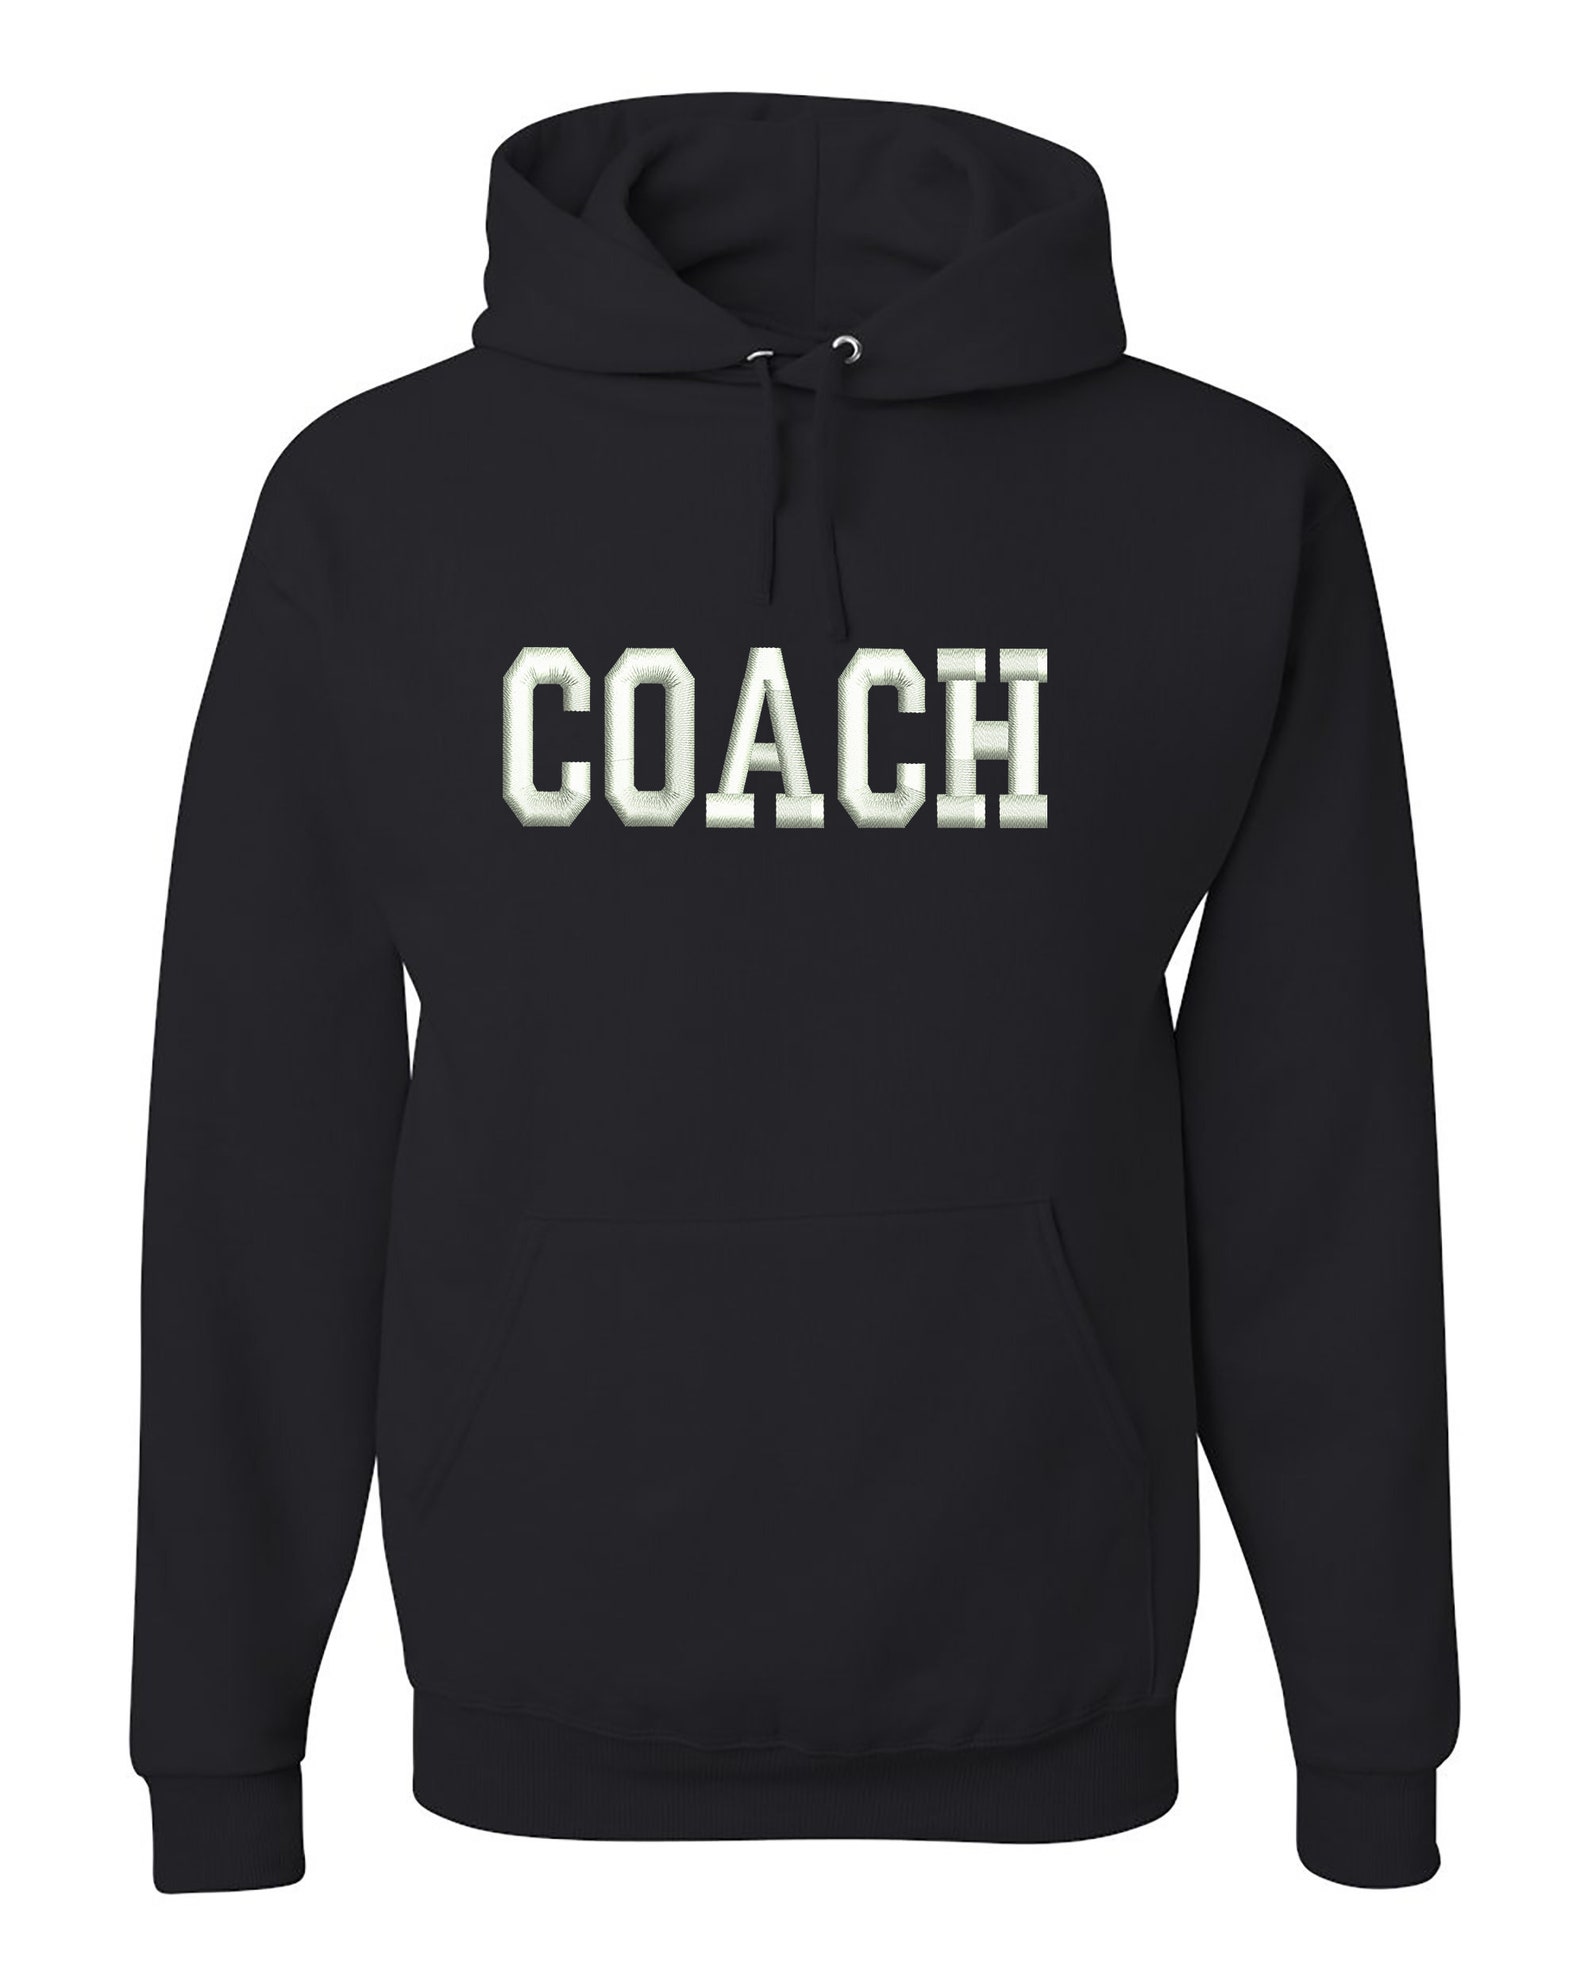 Coach Sweatshirt Unisex Embroidered Sweatshirt Sports Coach | Etsy